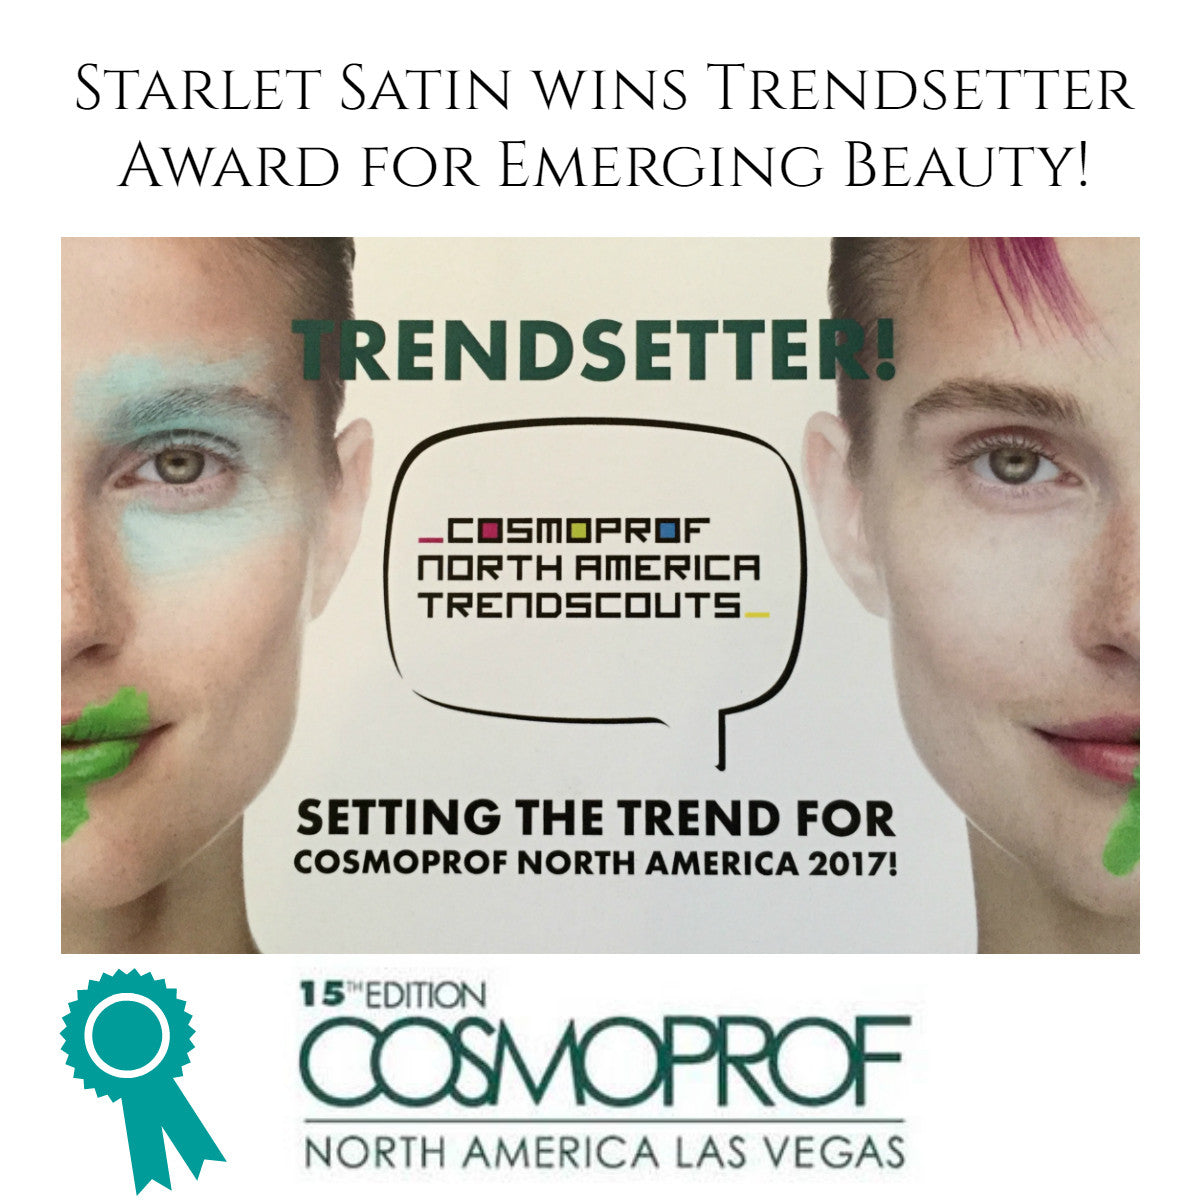 Satin Pillowcases by Starlet Satin win Trendsetter Award at Cosmoprof Beauty Show.